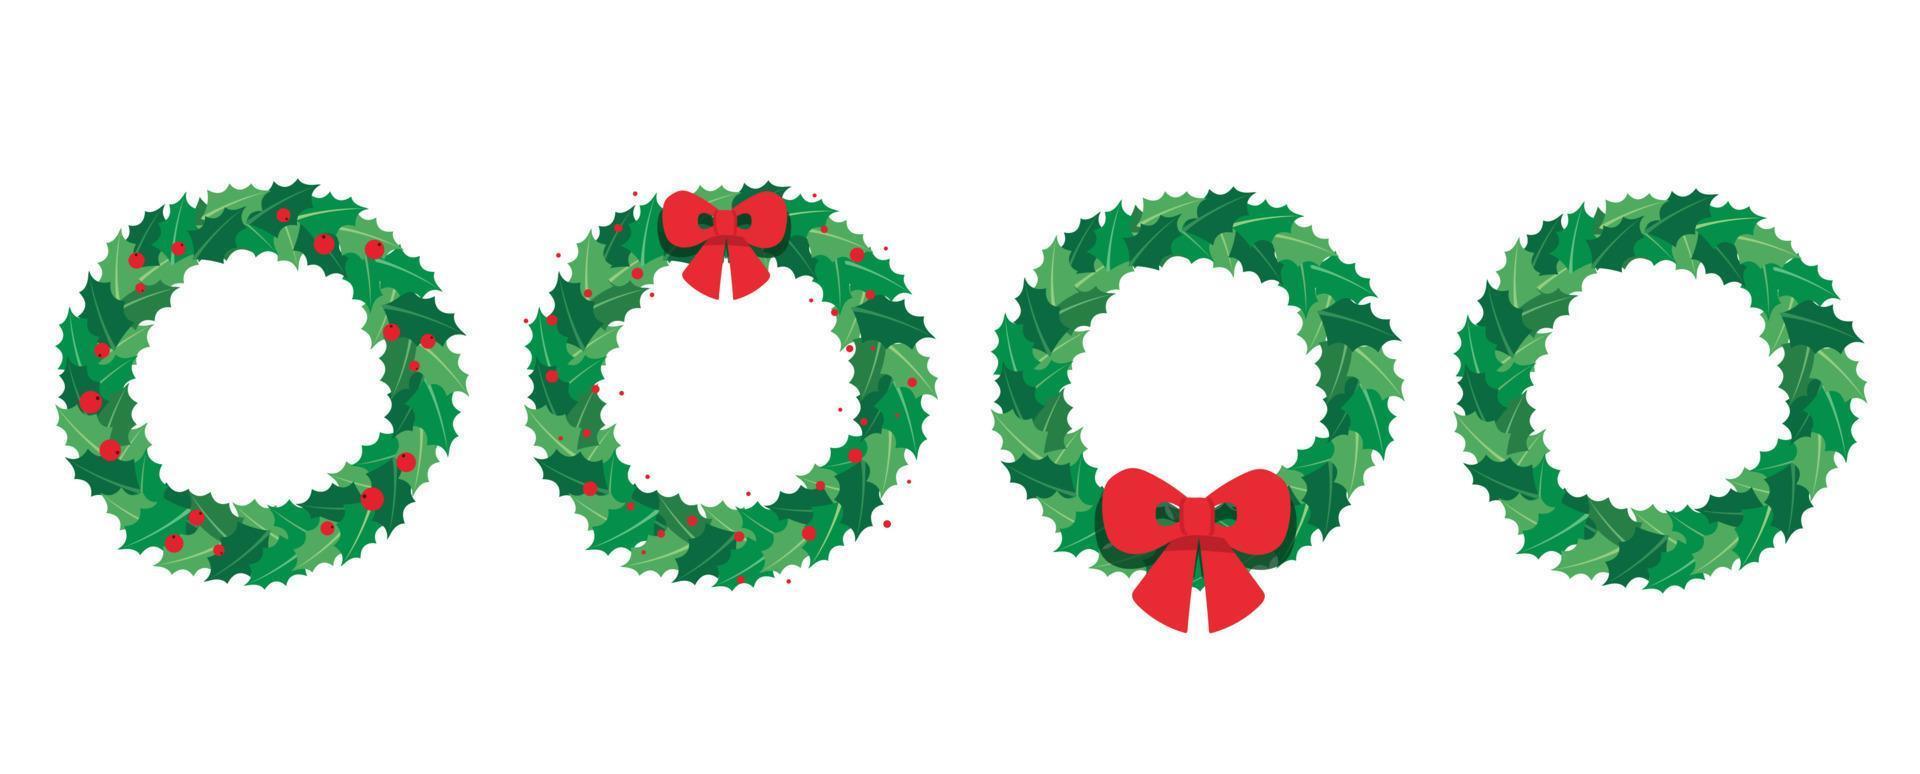 set of Christmas wreath leafs vector illustration